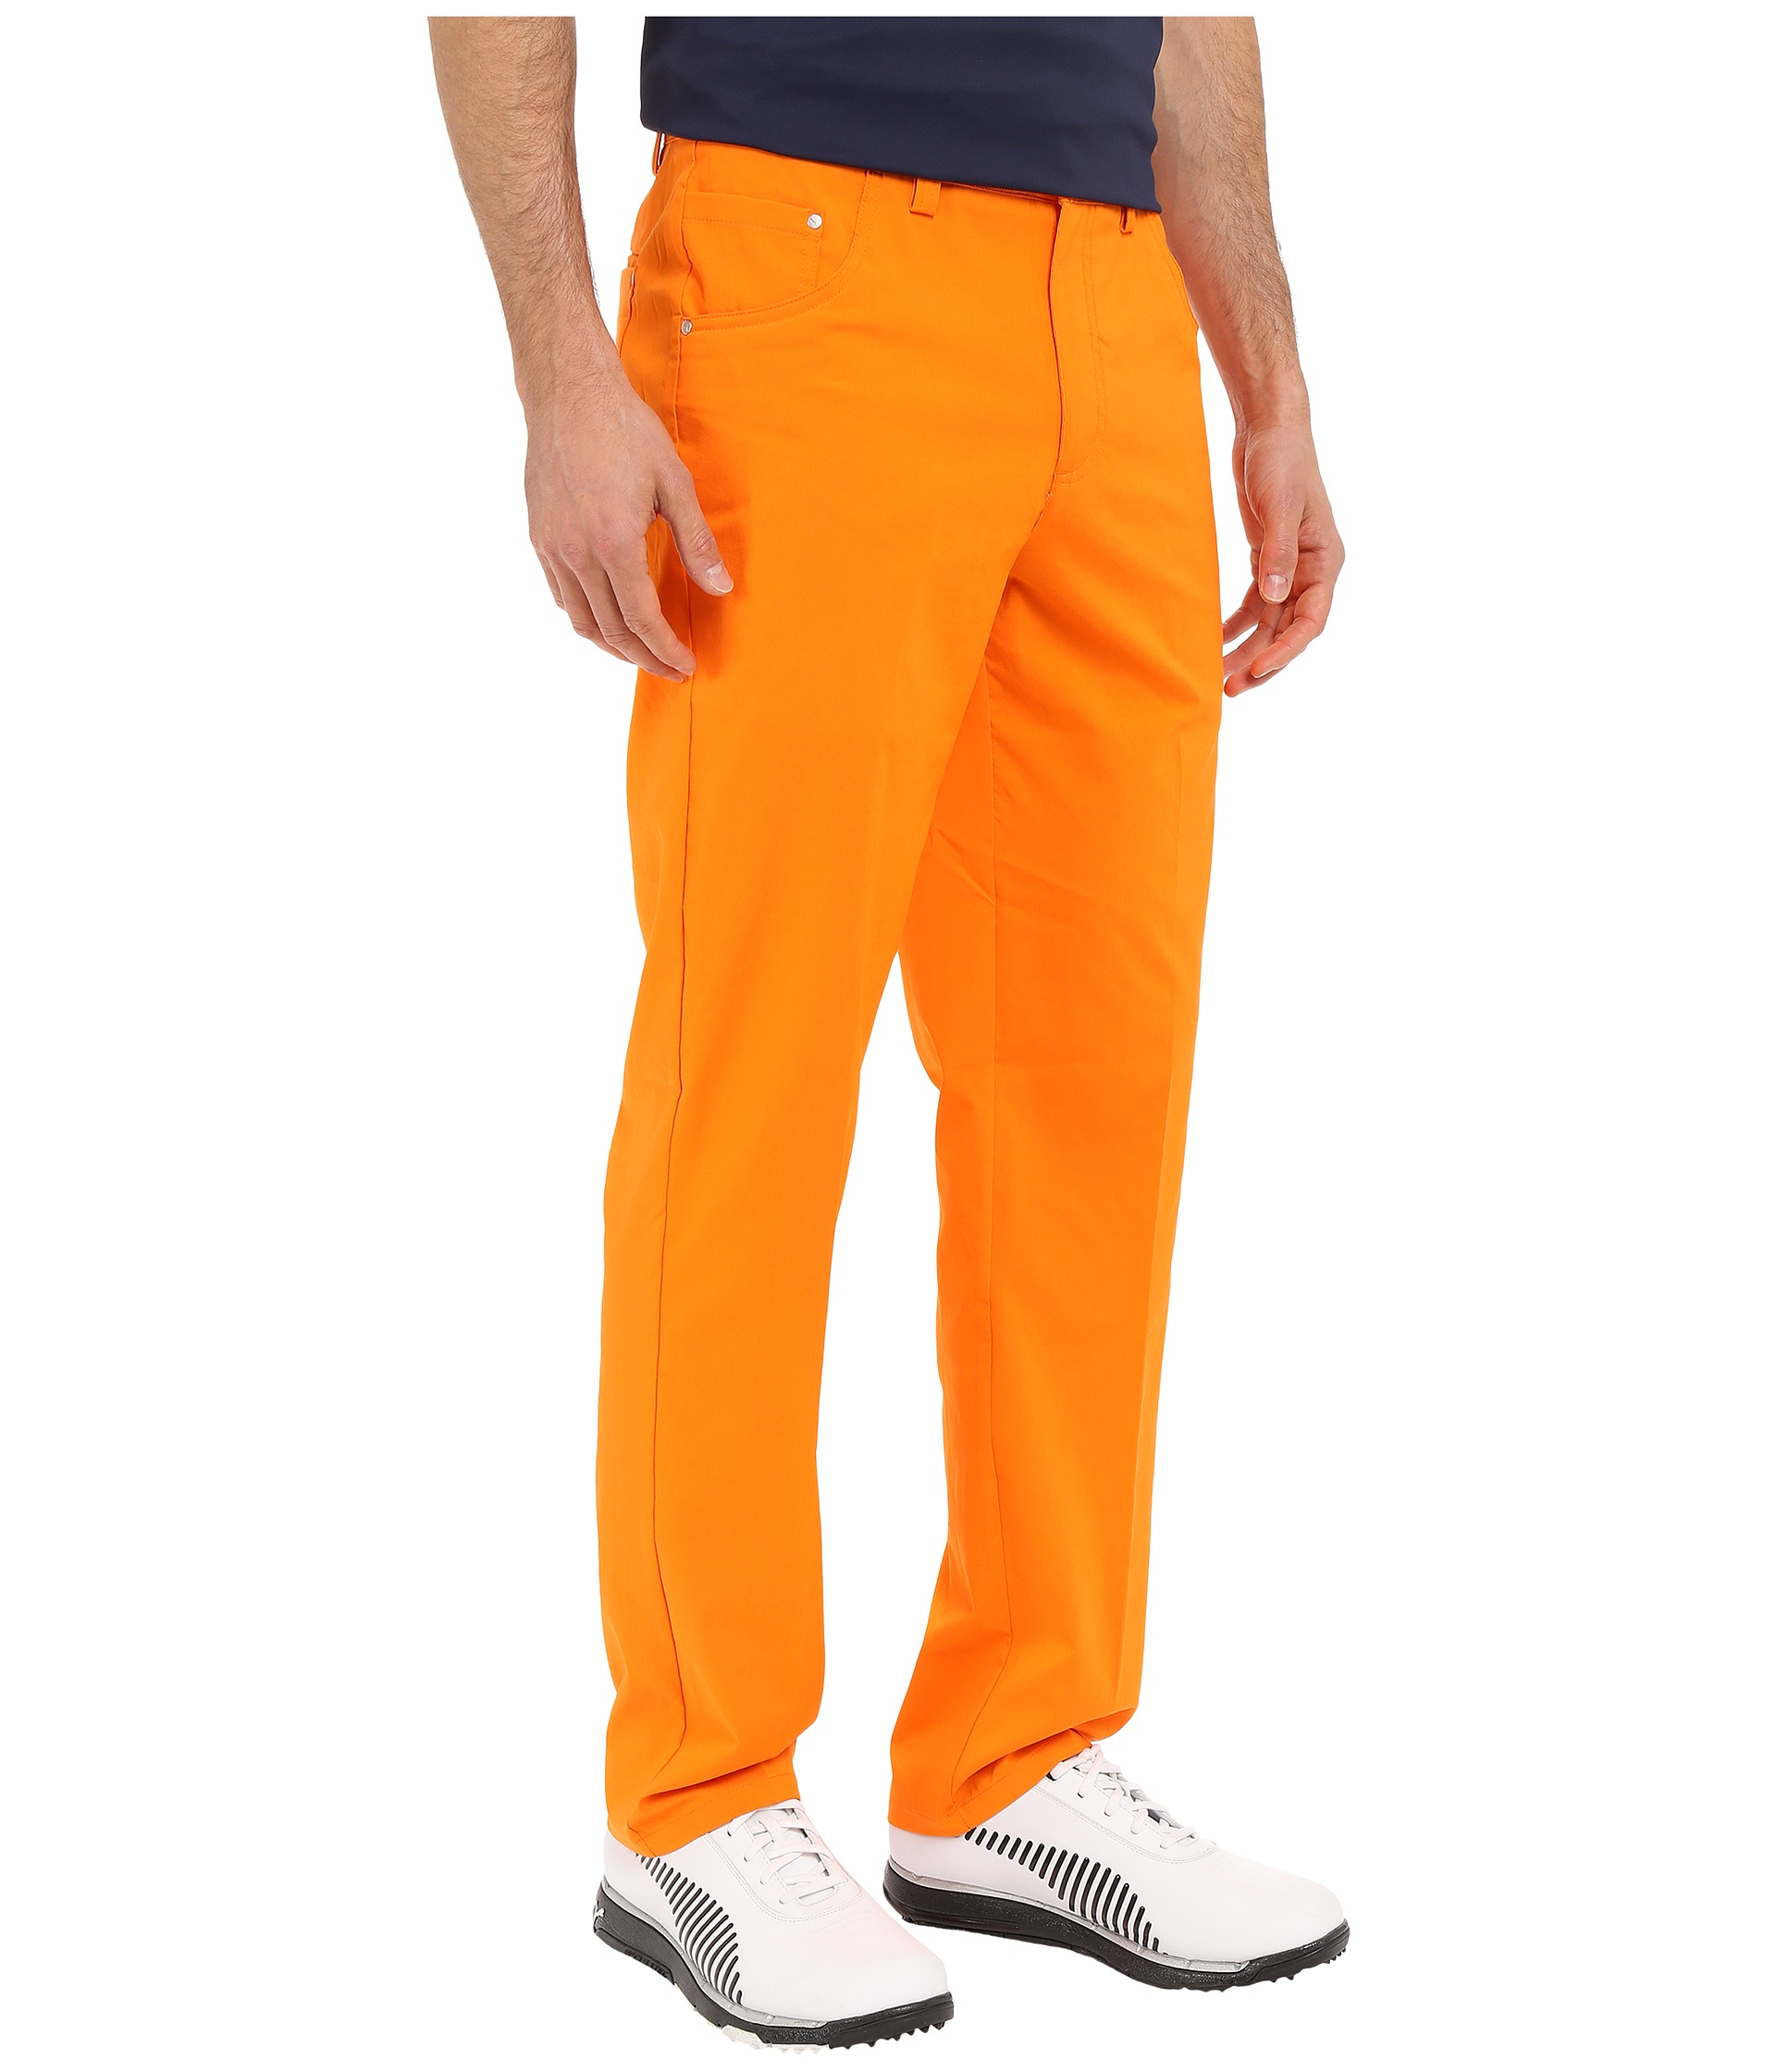 puma 6 pocket golf pants 2016